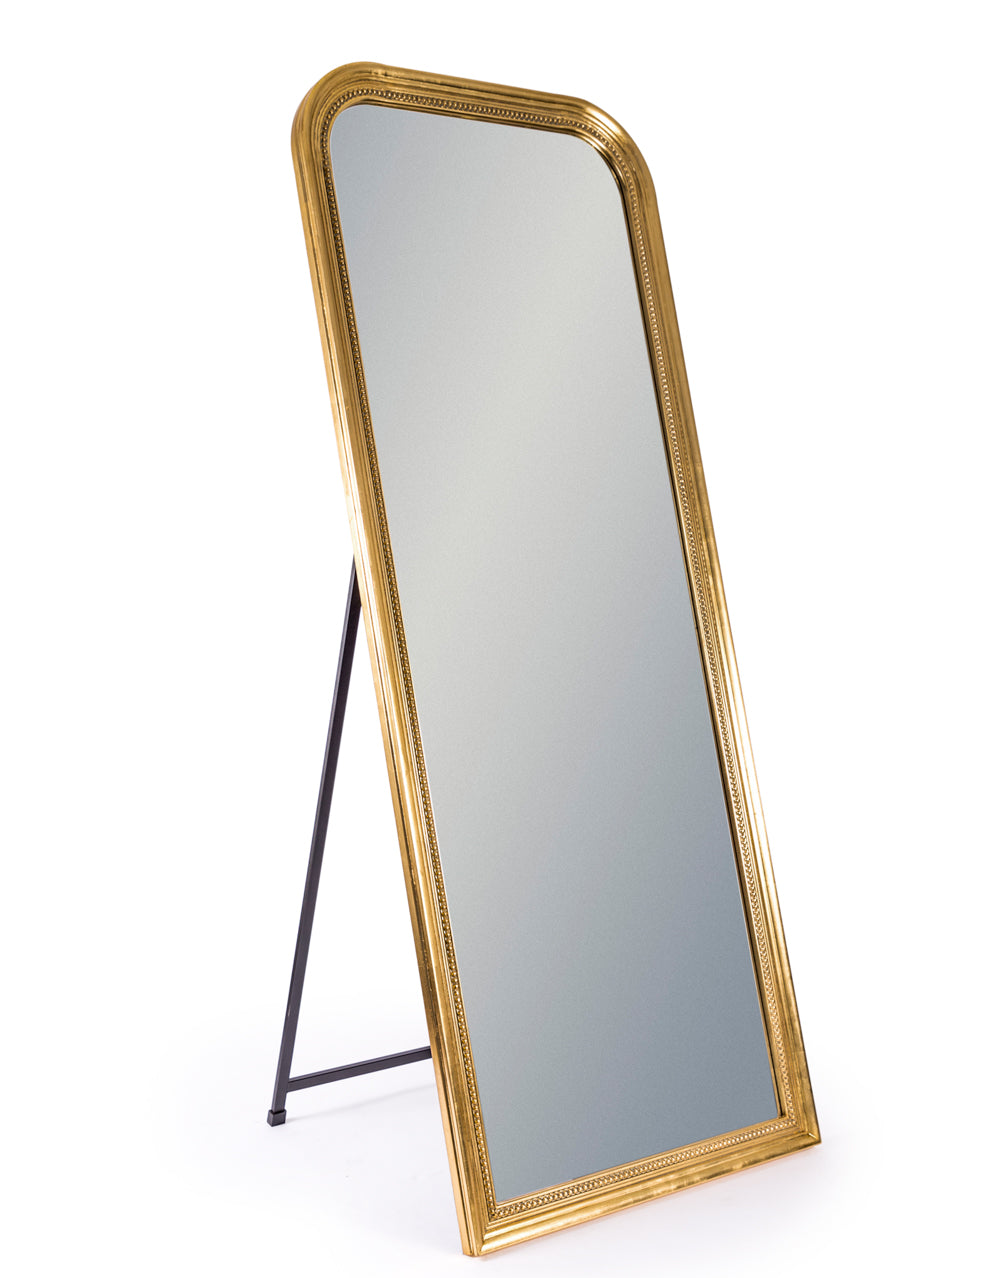 Freestanding mirror, gold mirror tall